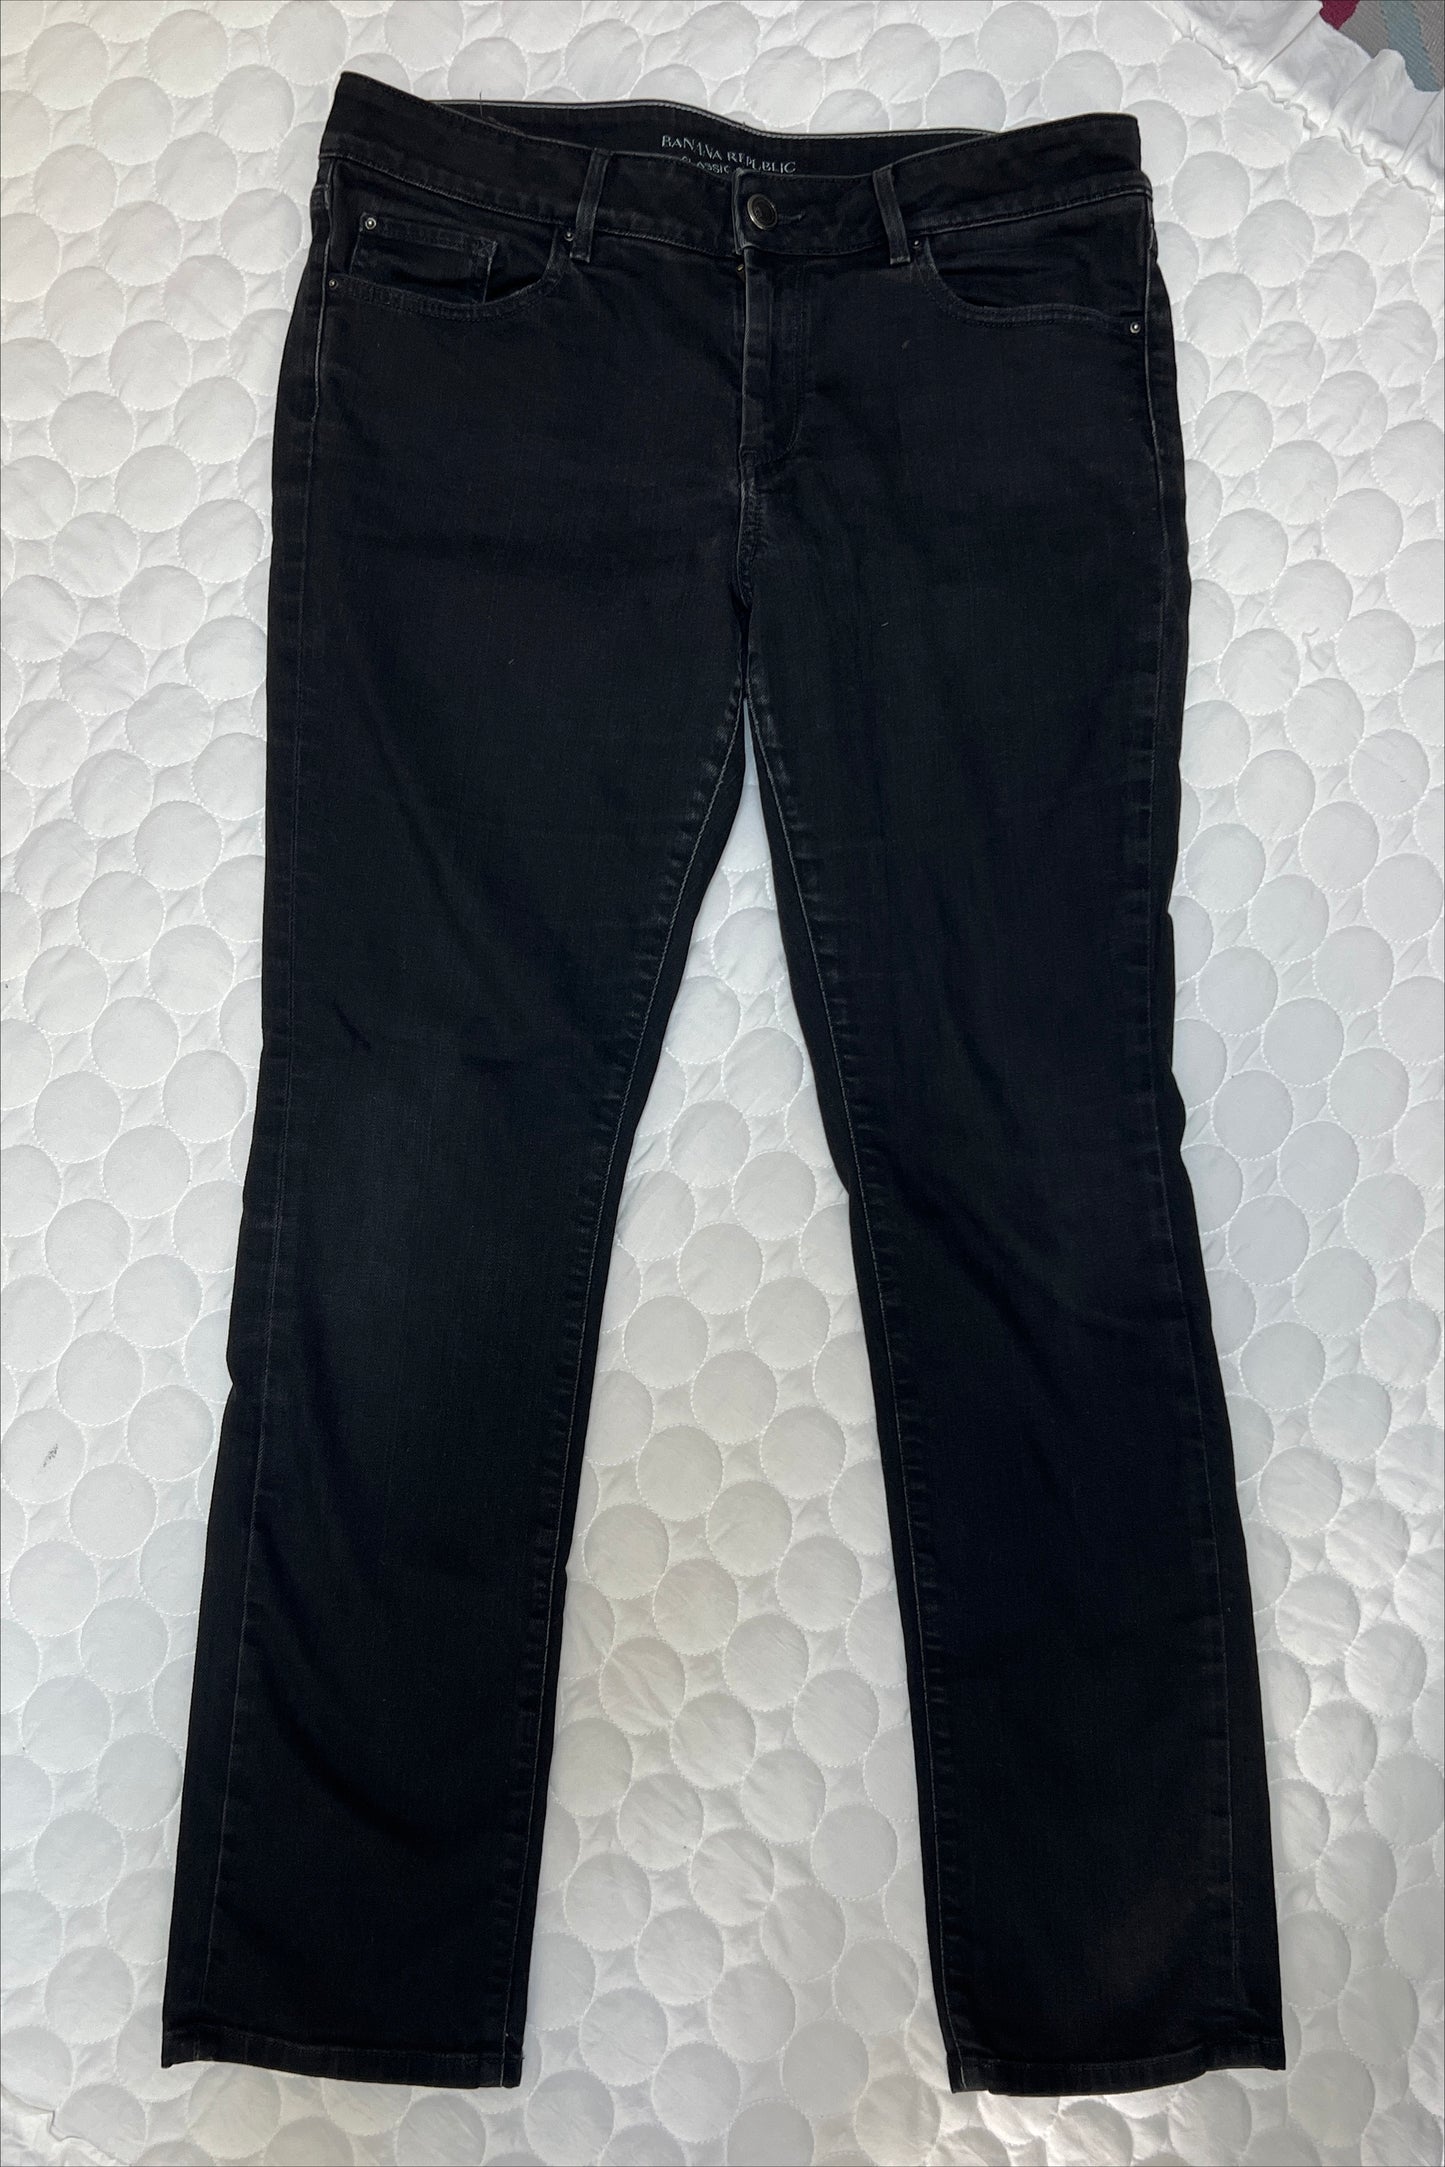 Size 14 Banana Republic classic skinny black jeans, VGUC